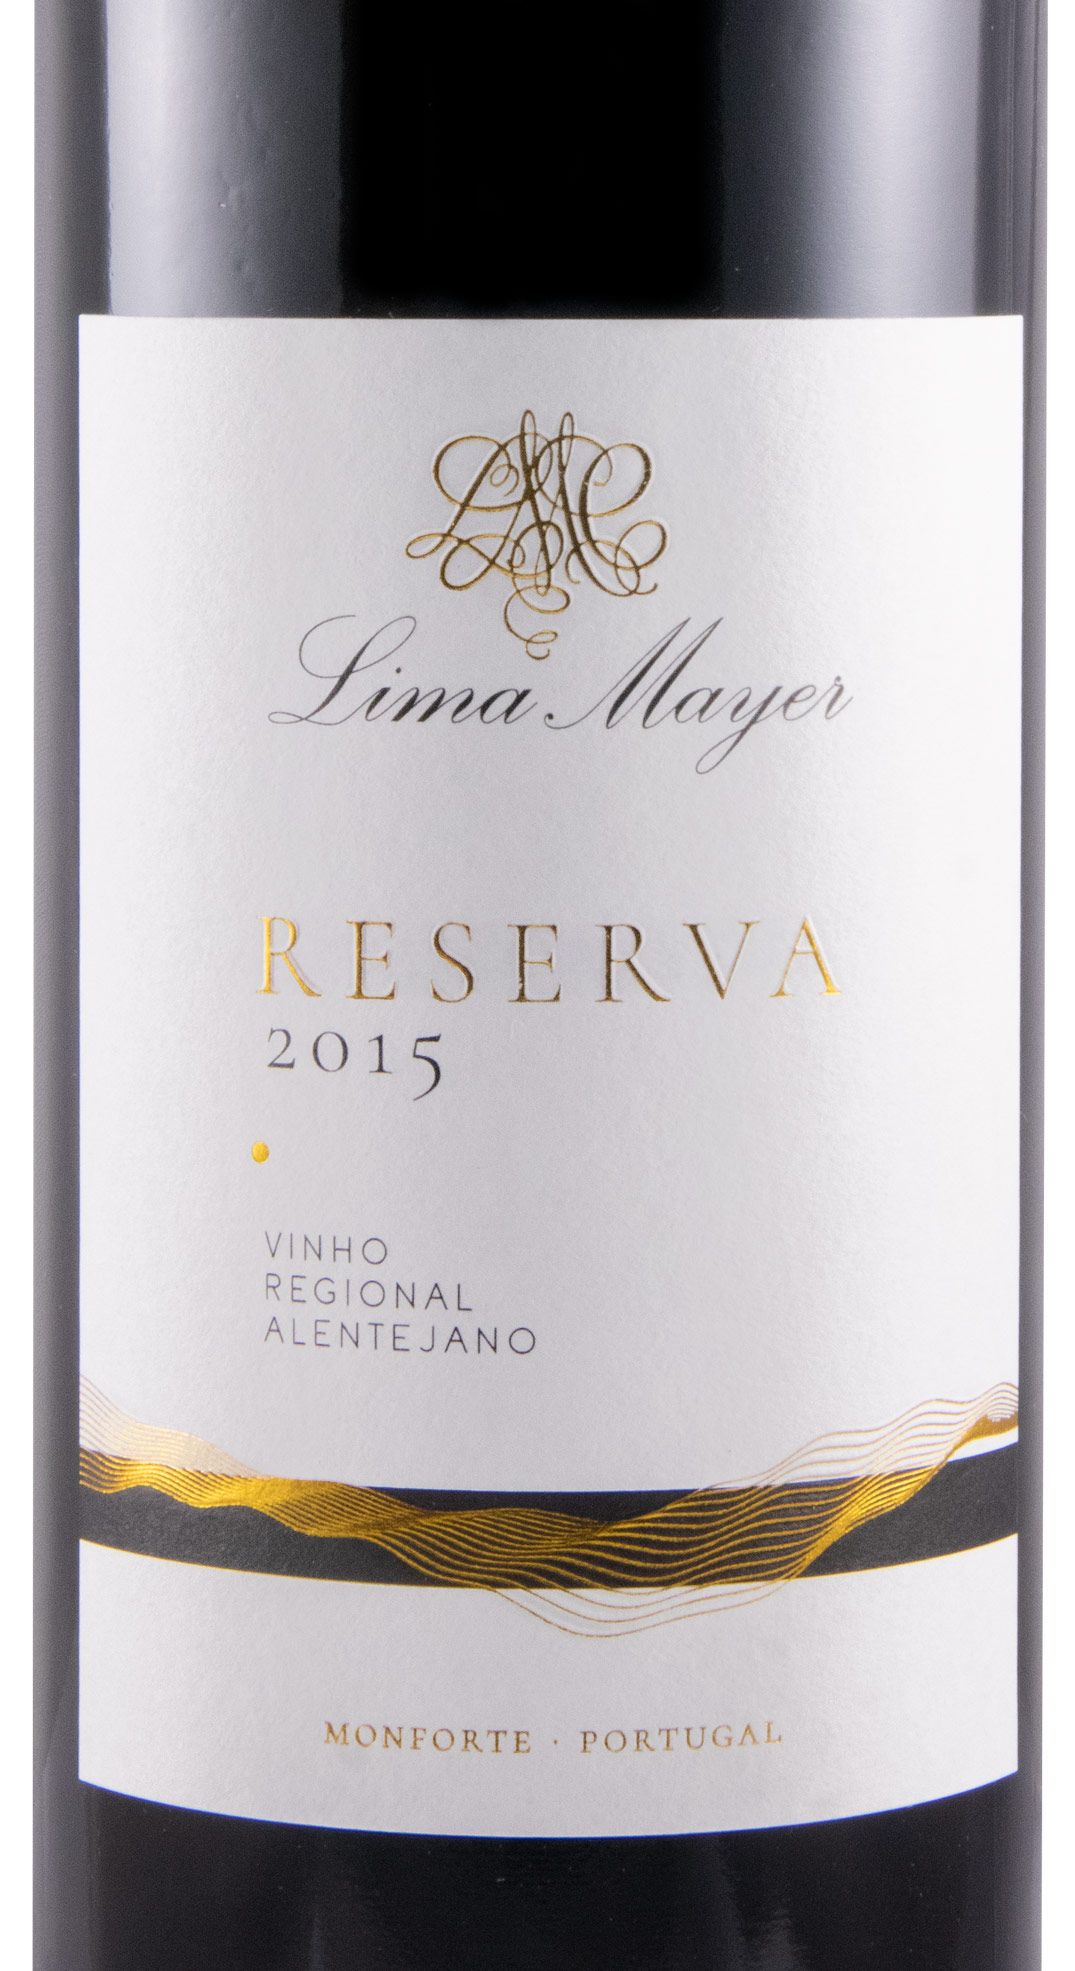 2015 Lima Mayer Reserva tinto